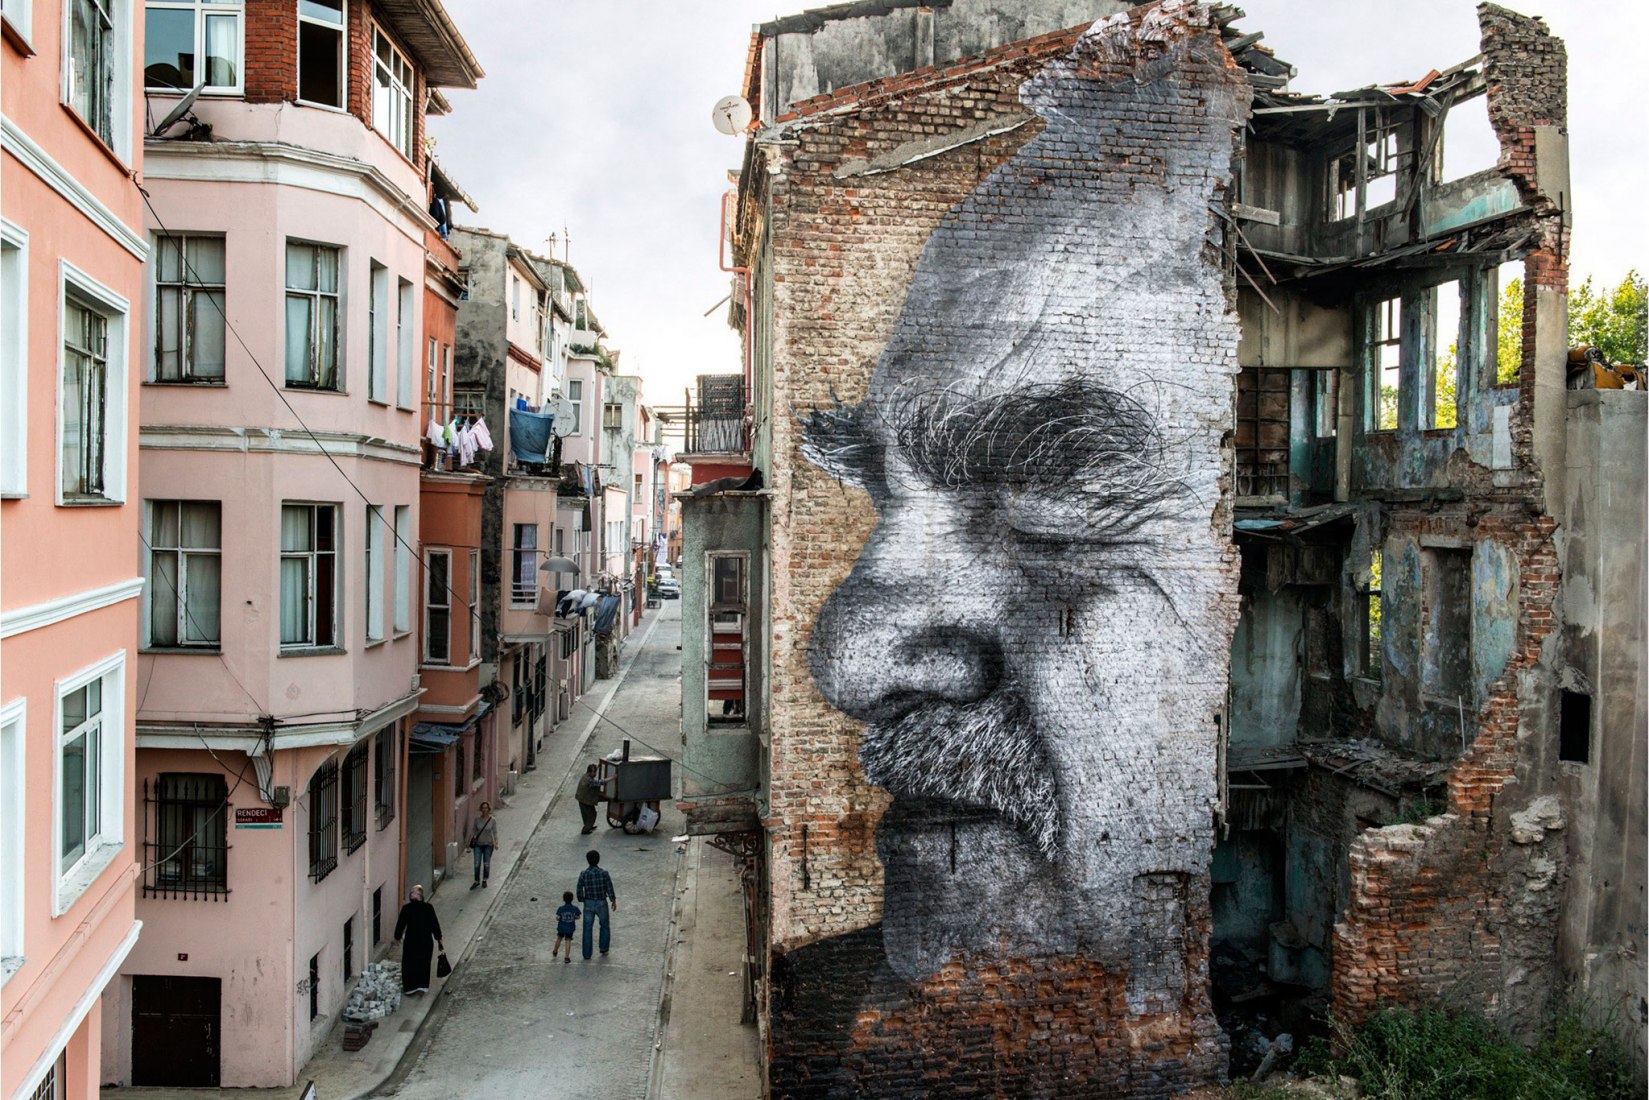 JR, The Wrinkles of the City, Kadir an, Turquía (2015). 